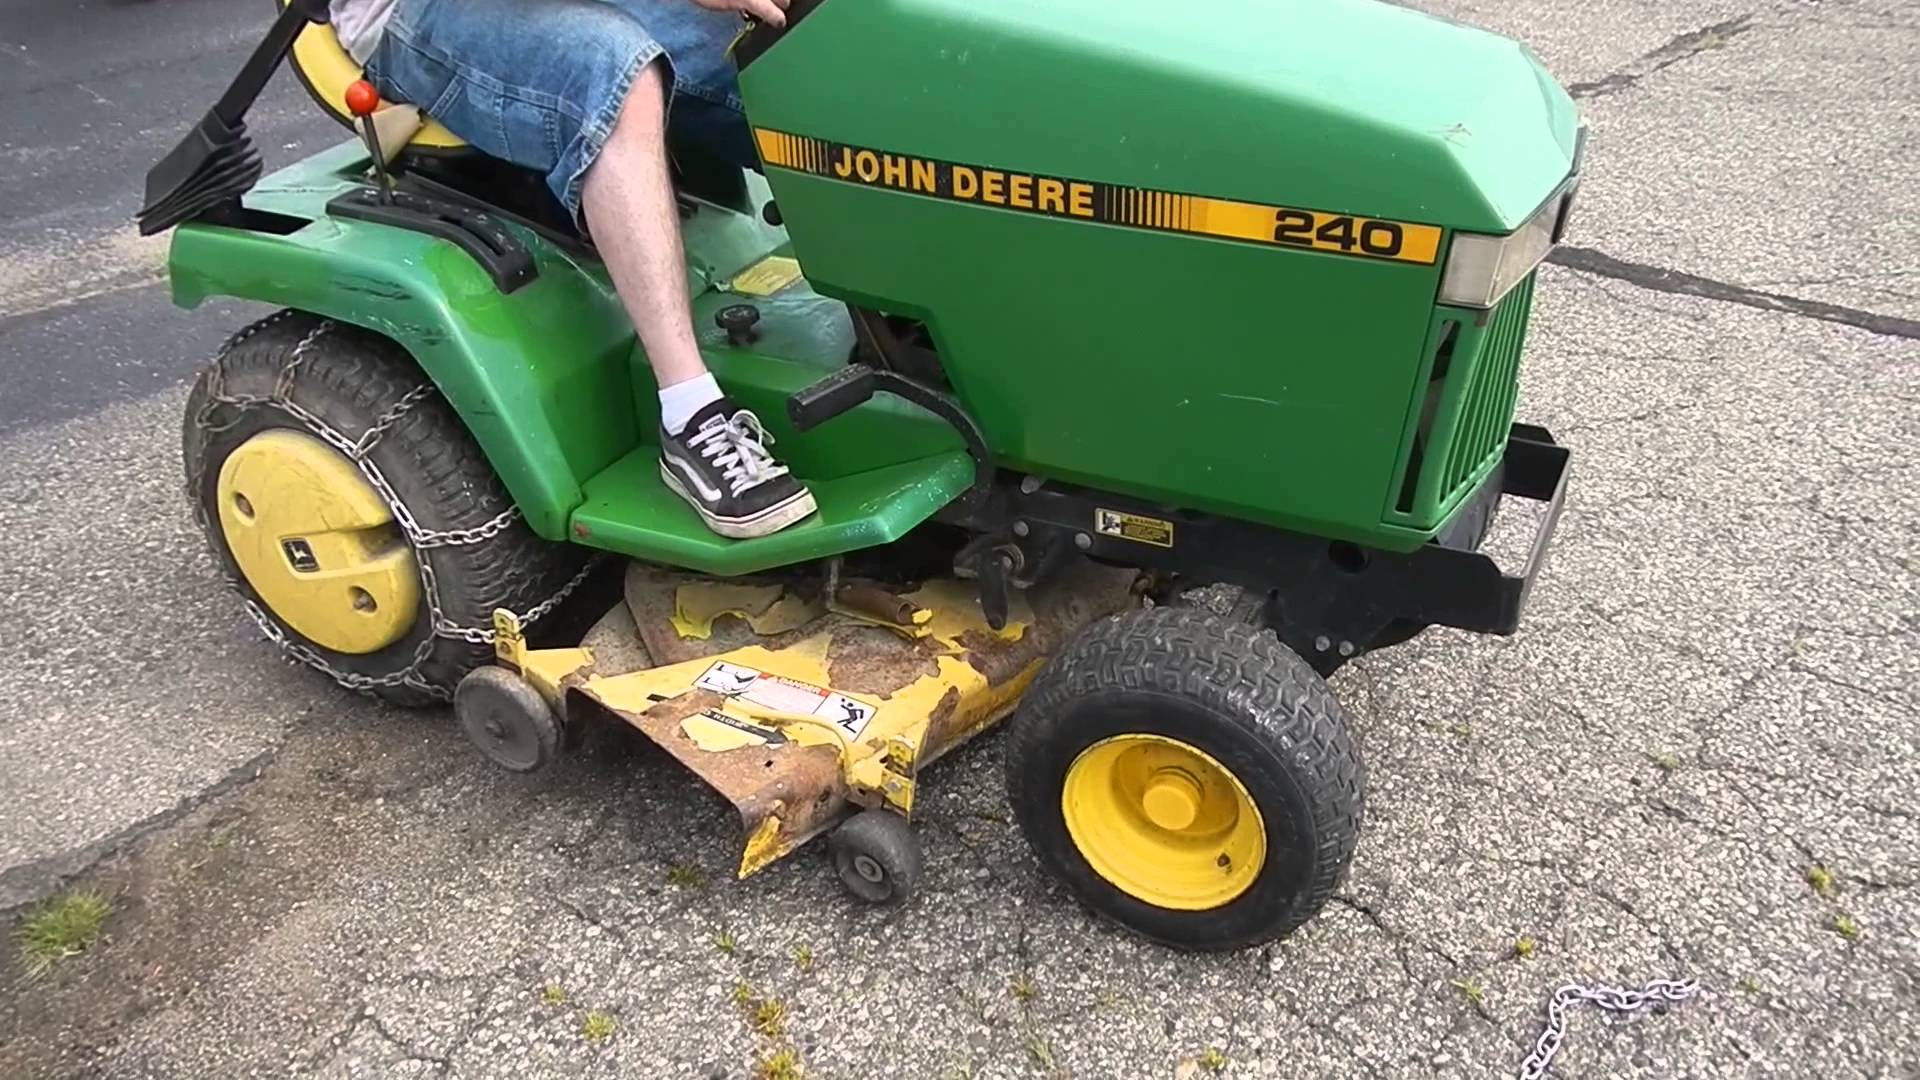 John Deere 240 Riding Lawn Mower - YouTube